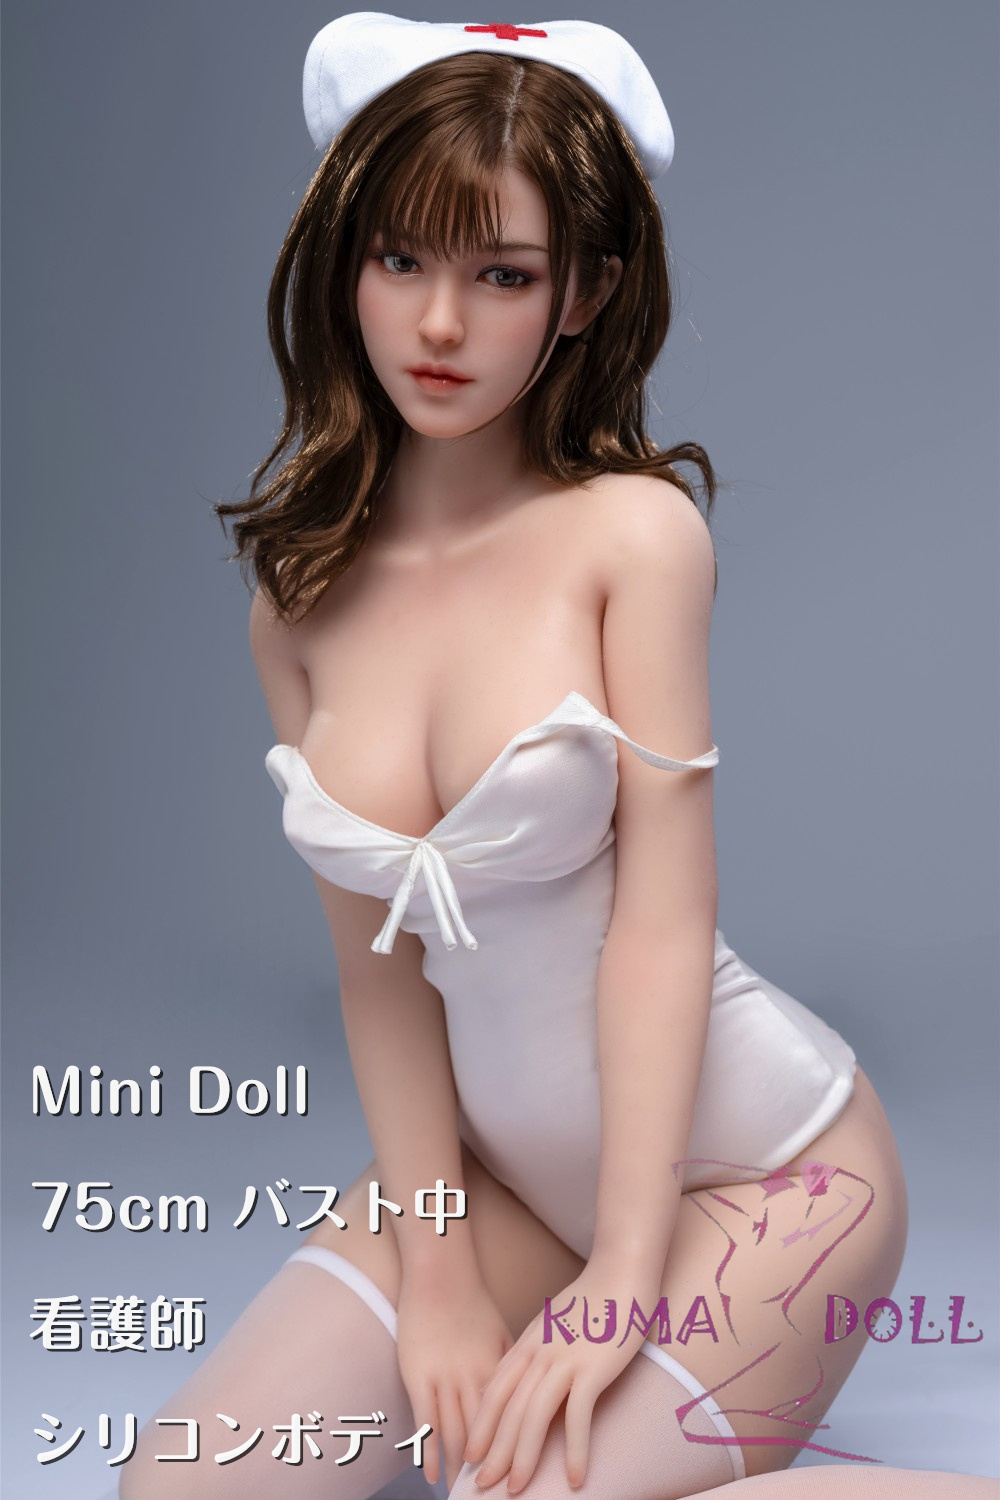 Minidoll 75cm 看護師 小型ラブドール シリコン材質 ミニドール 4.6kg 塗装済みフィギュア セックス可能 ボディ選択可能 Cospaly衣装+スタンド 選択可能